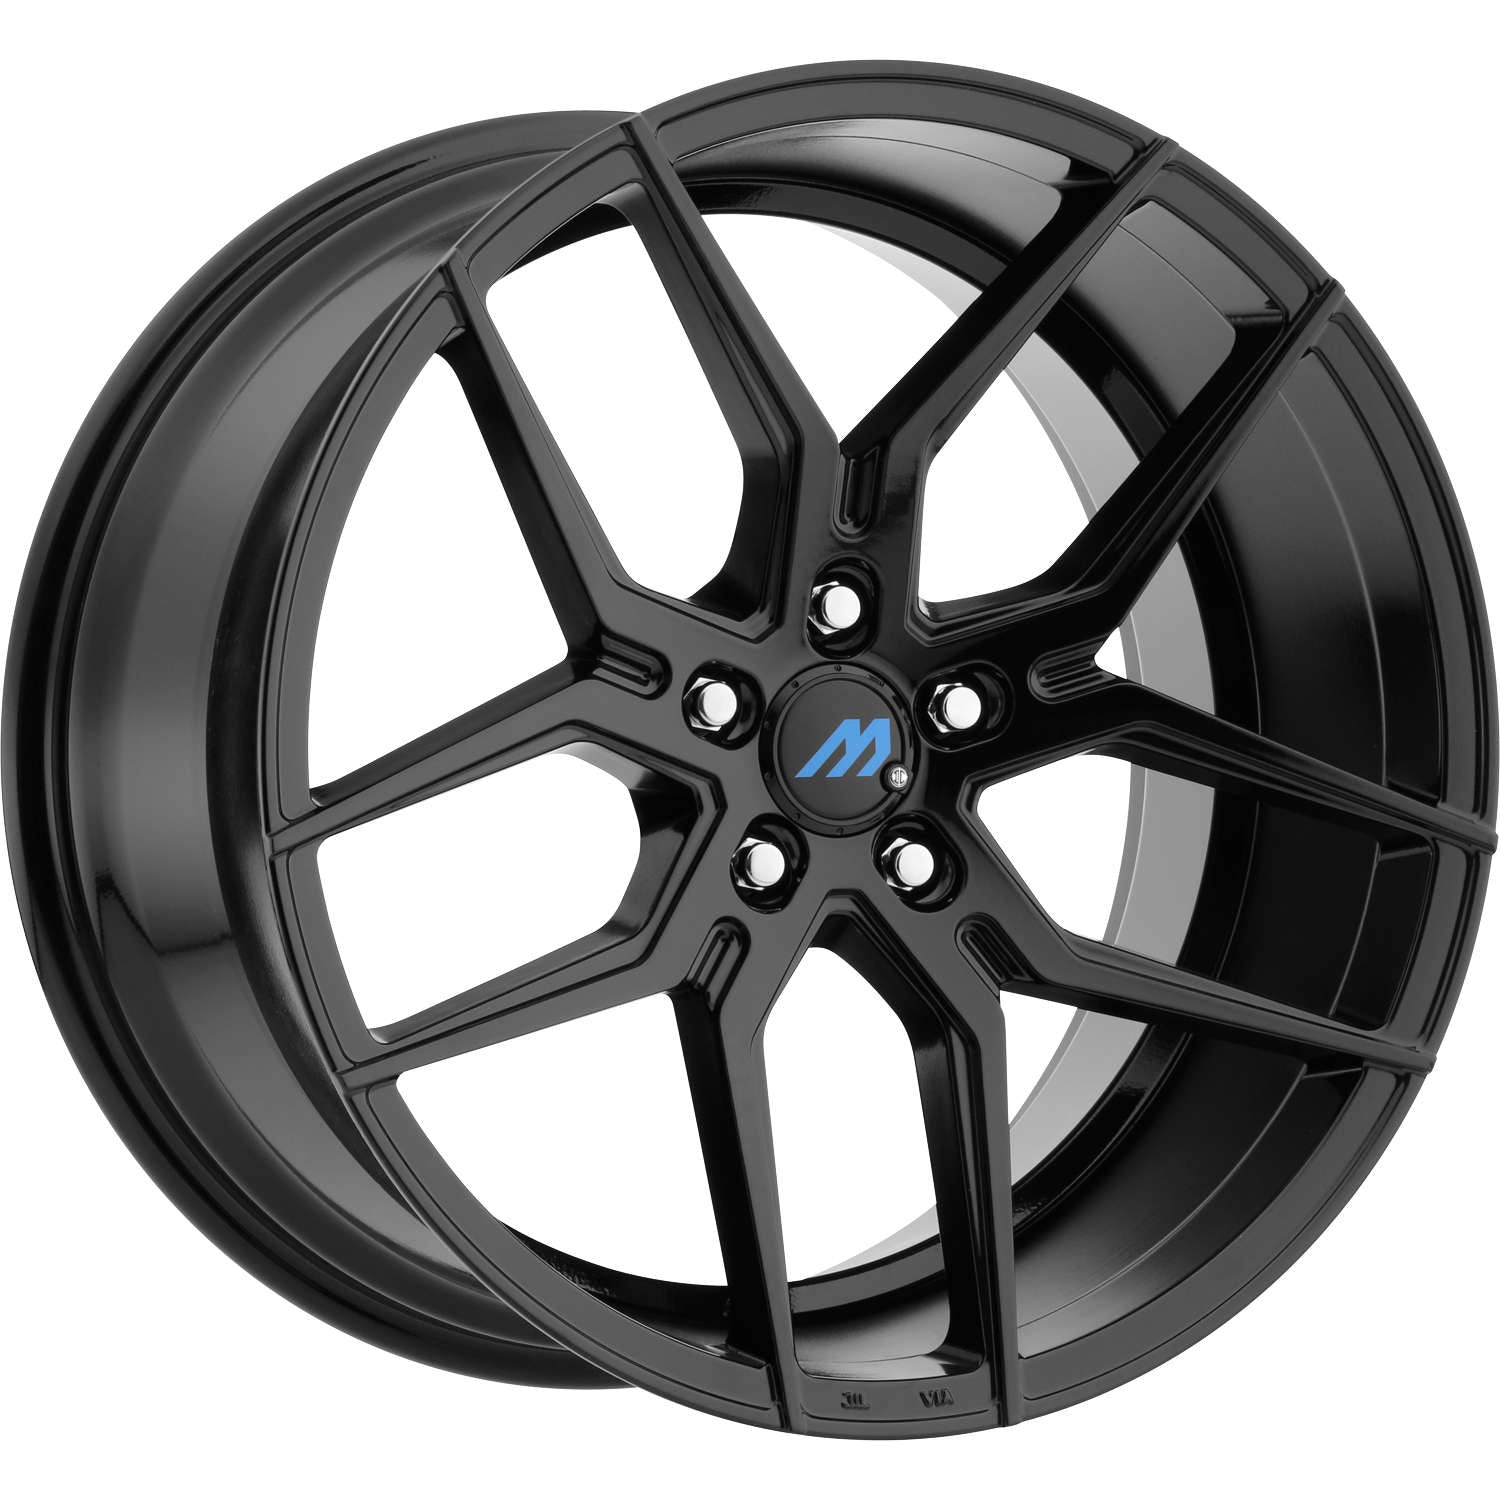 Mach ME4 Cast Alloy wheel - Gloss Black | Offfset.com